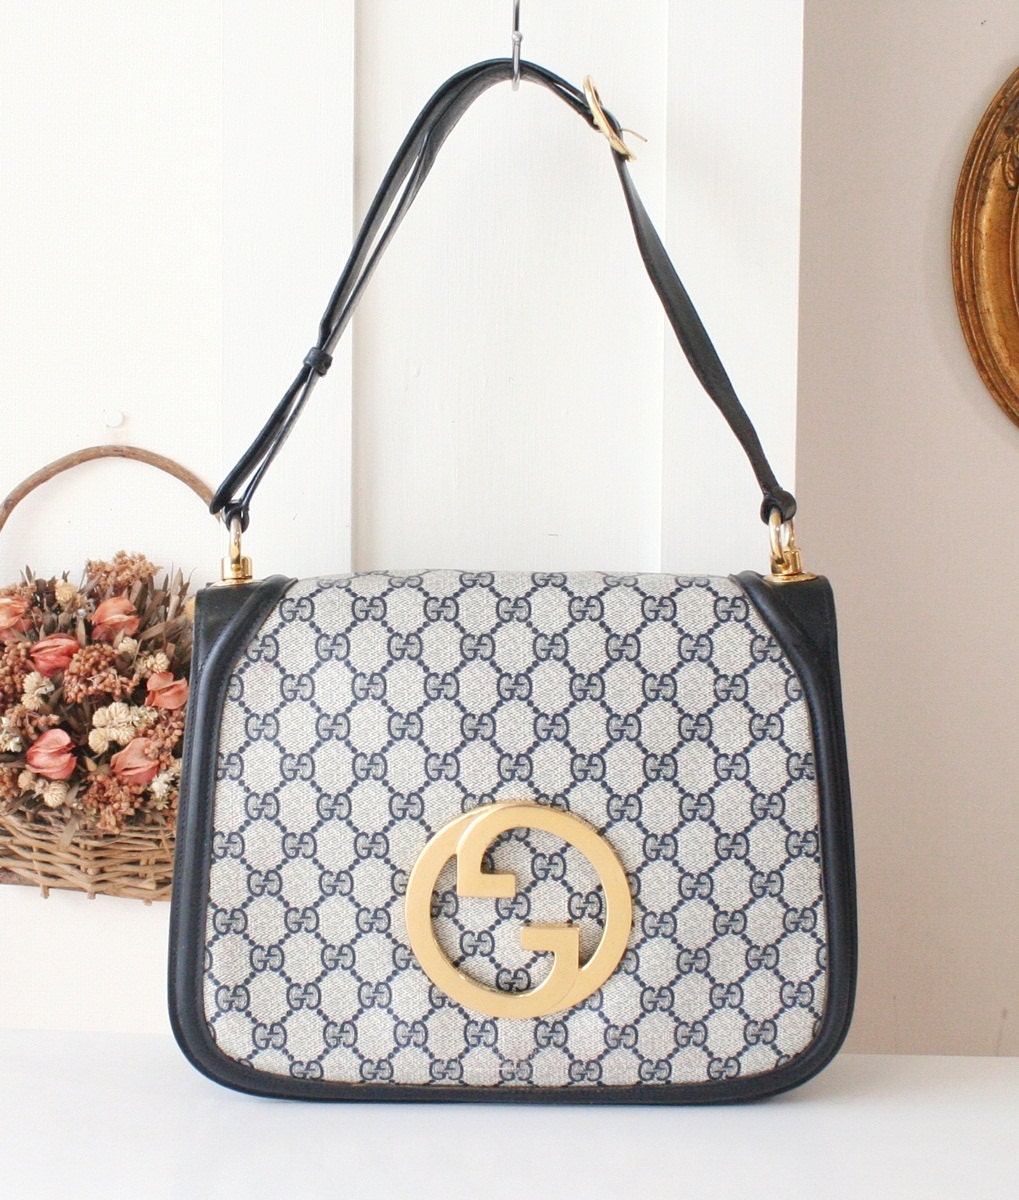 Gucci Monogram Big Logo 2 ways handbag purse authentic bags